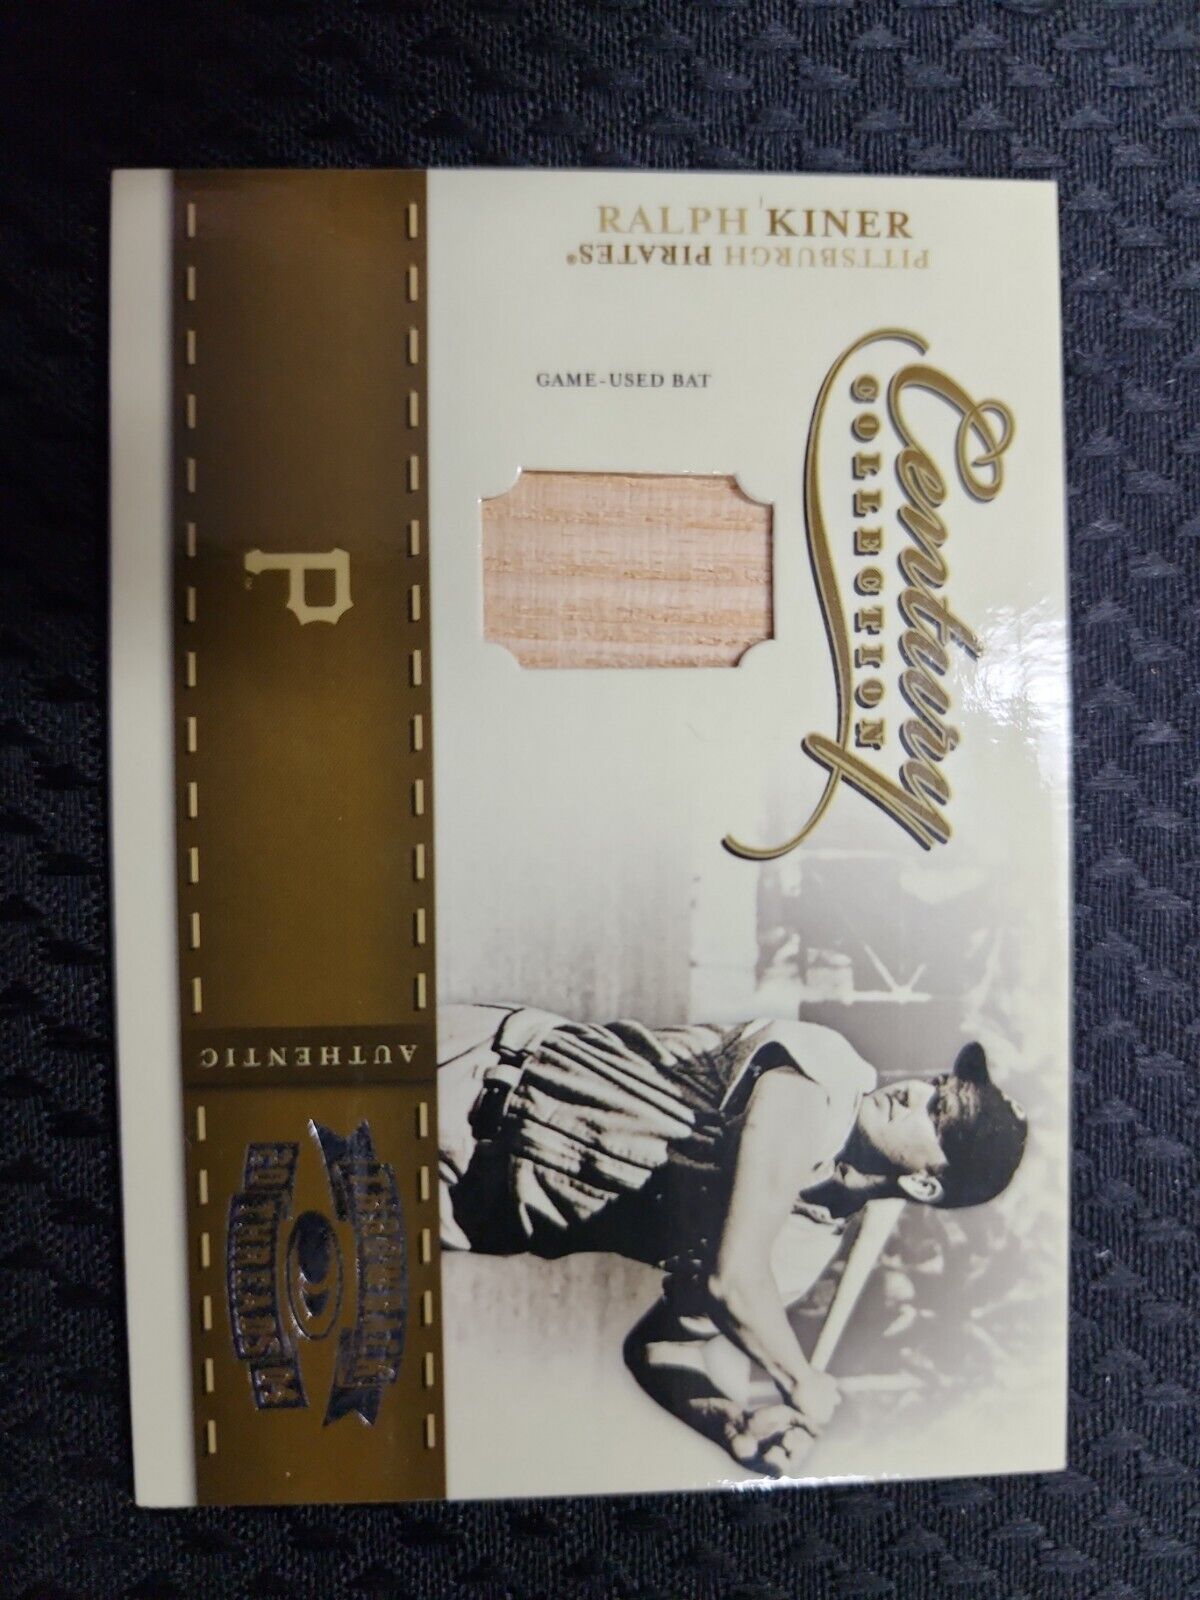 2004 Donruss Throwback Threads Ralph Kiner Game Used Bat Card #’d/250